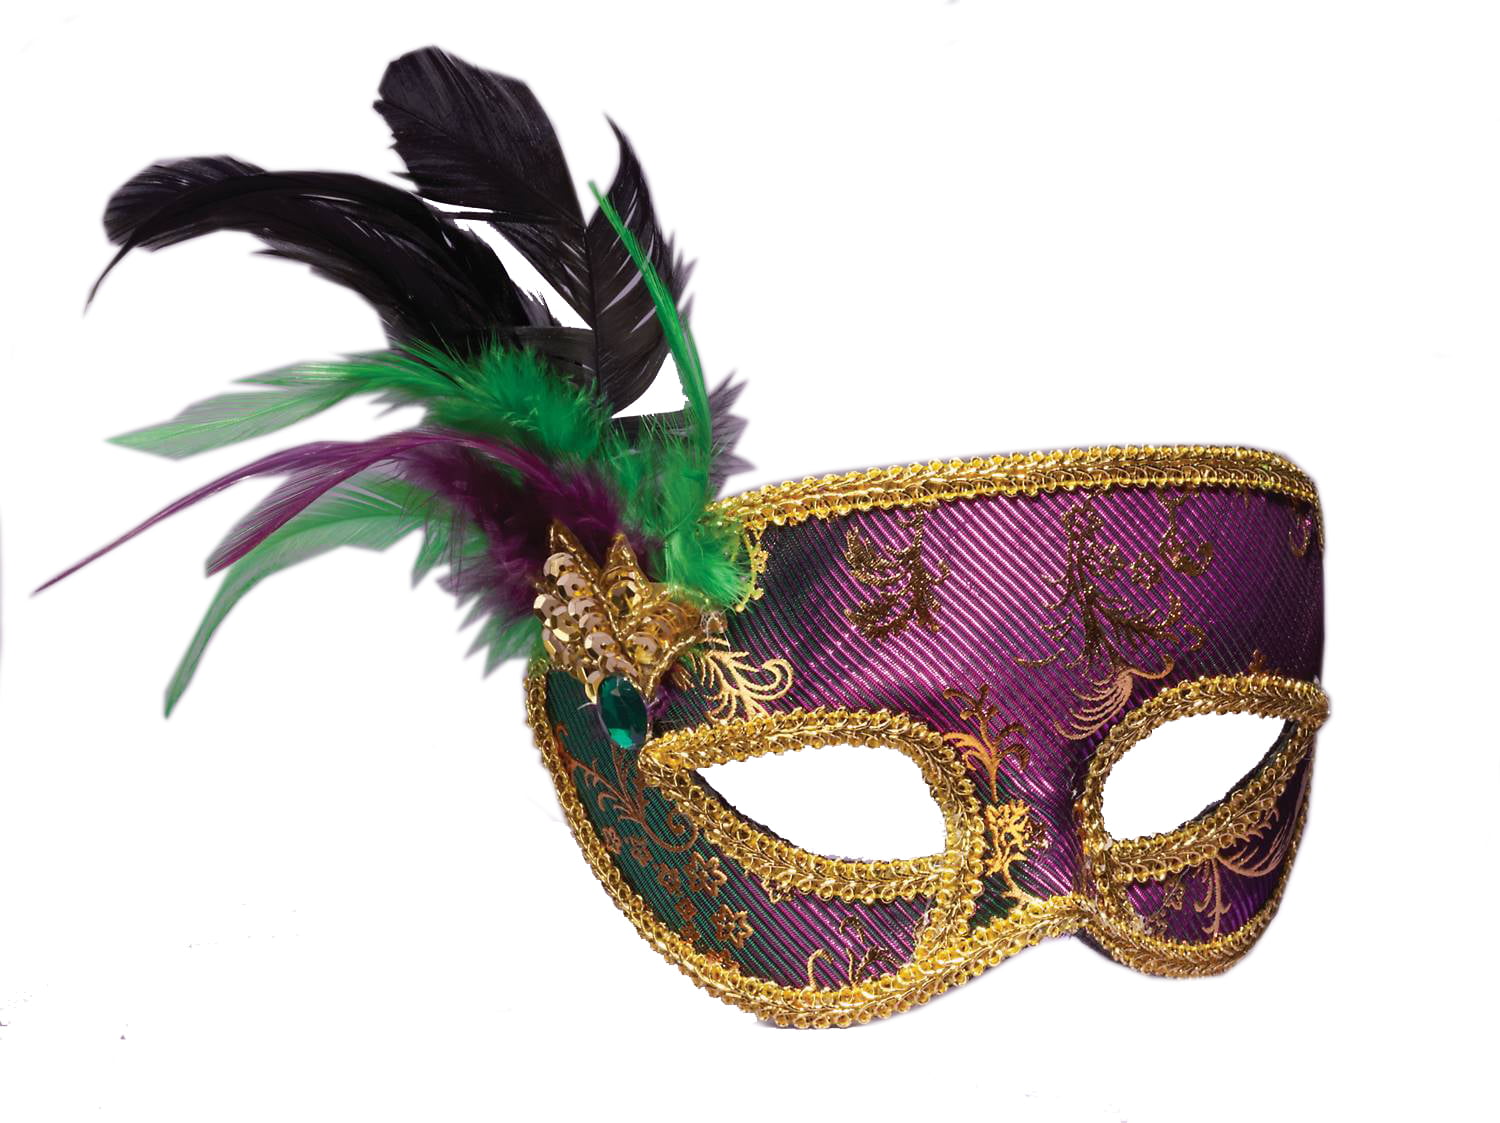 Venetian Style Purple & Green Mardi Gras Feather Stick Mask